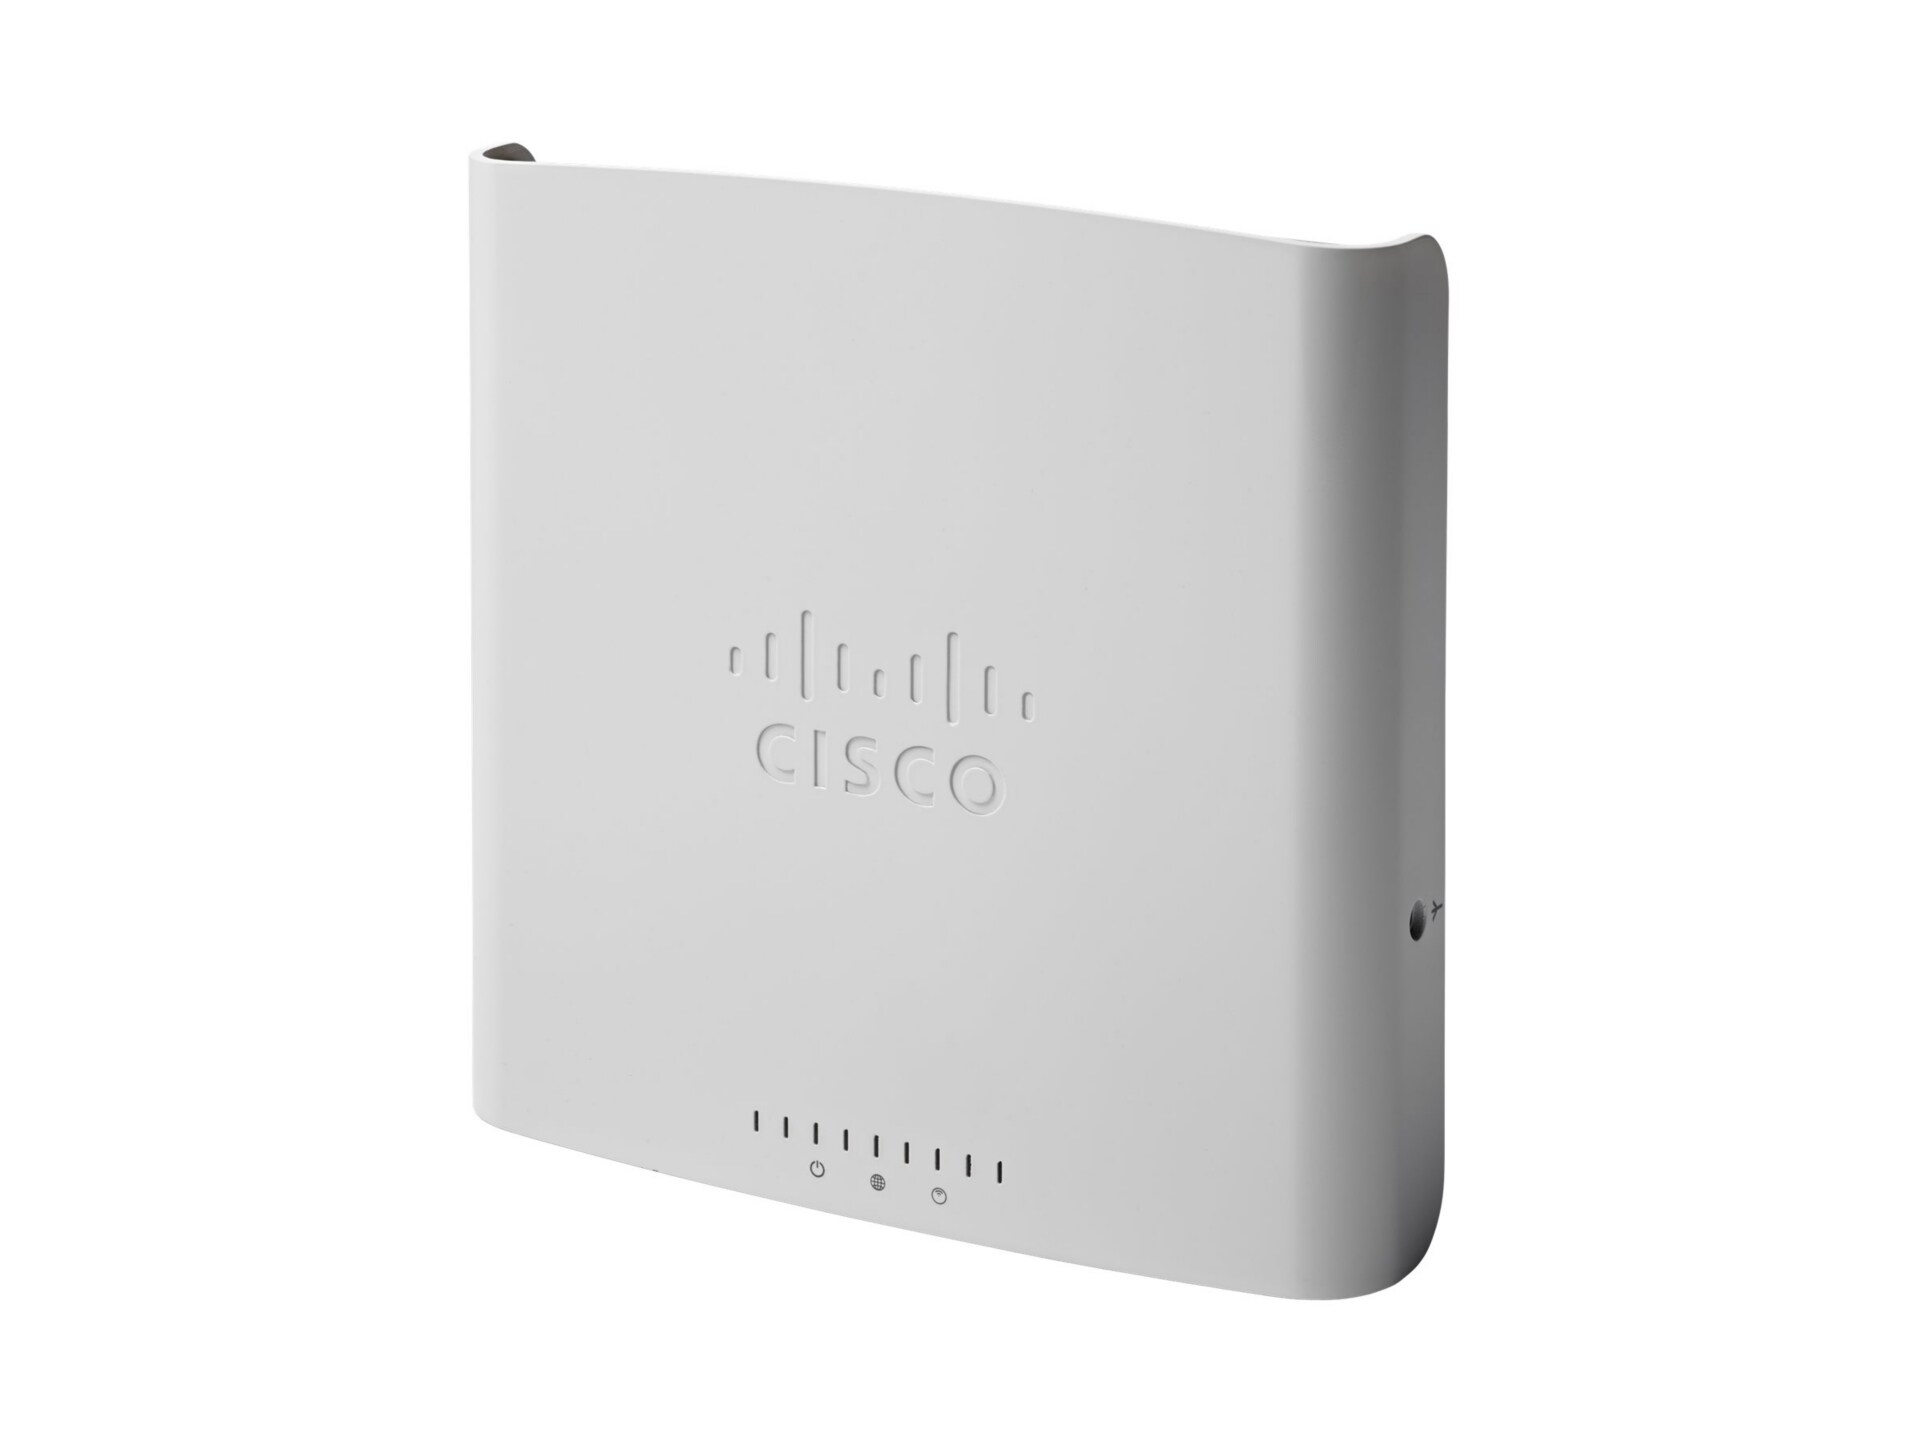 Cisco Universal Small Cell 7330 - wireless cellular modem - 3G